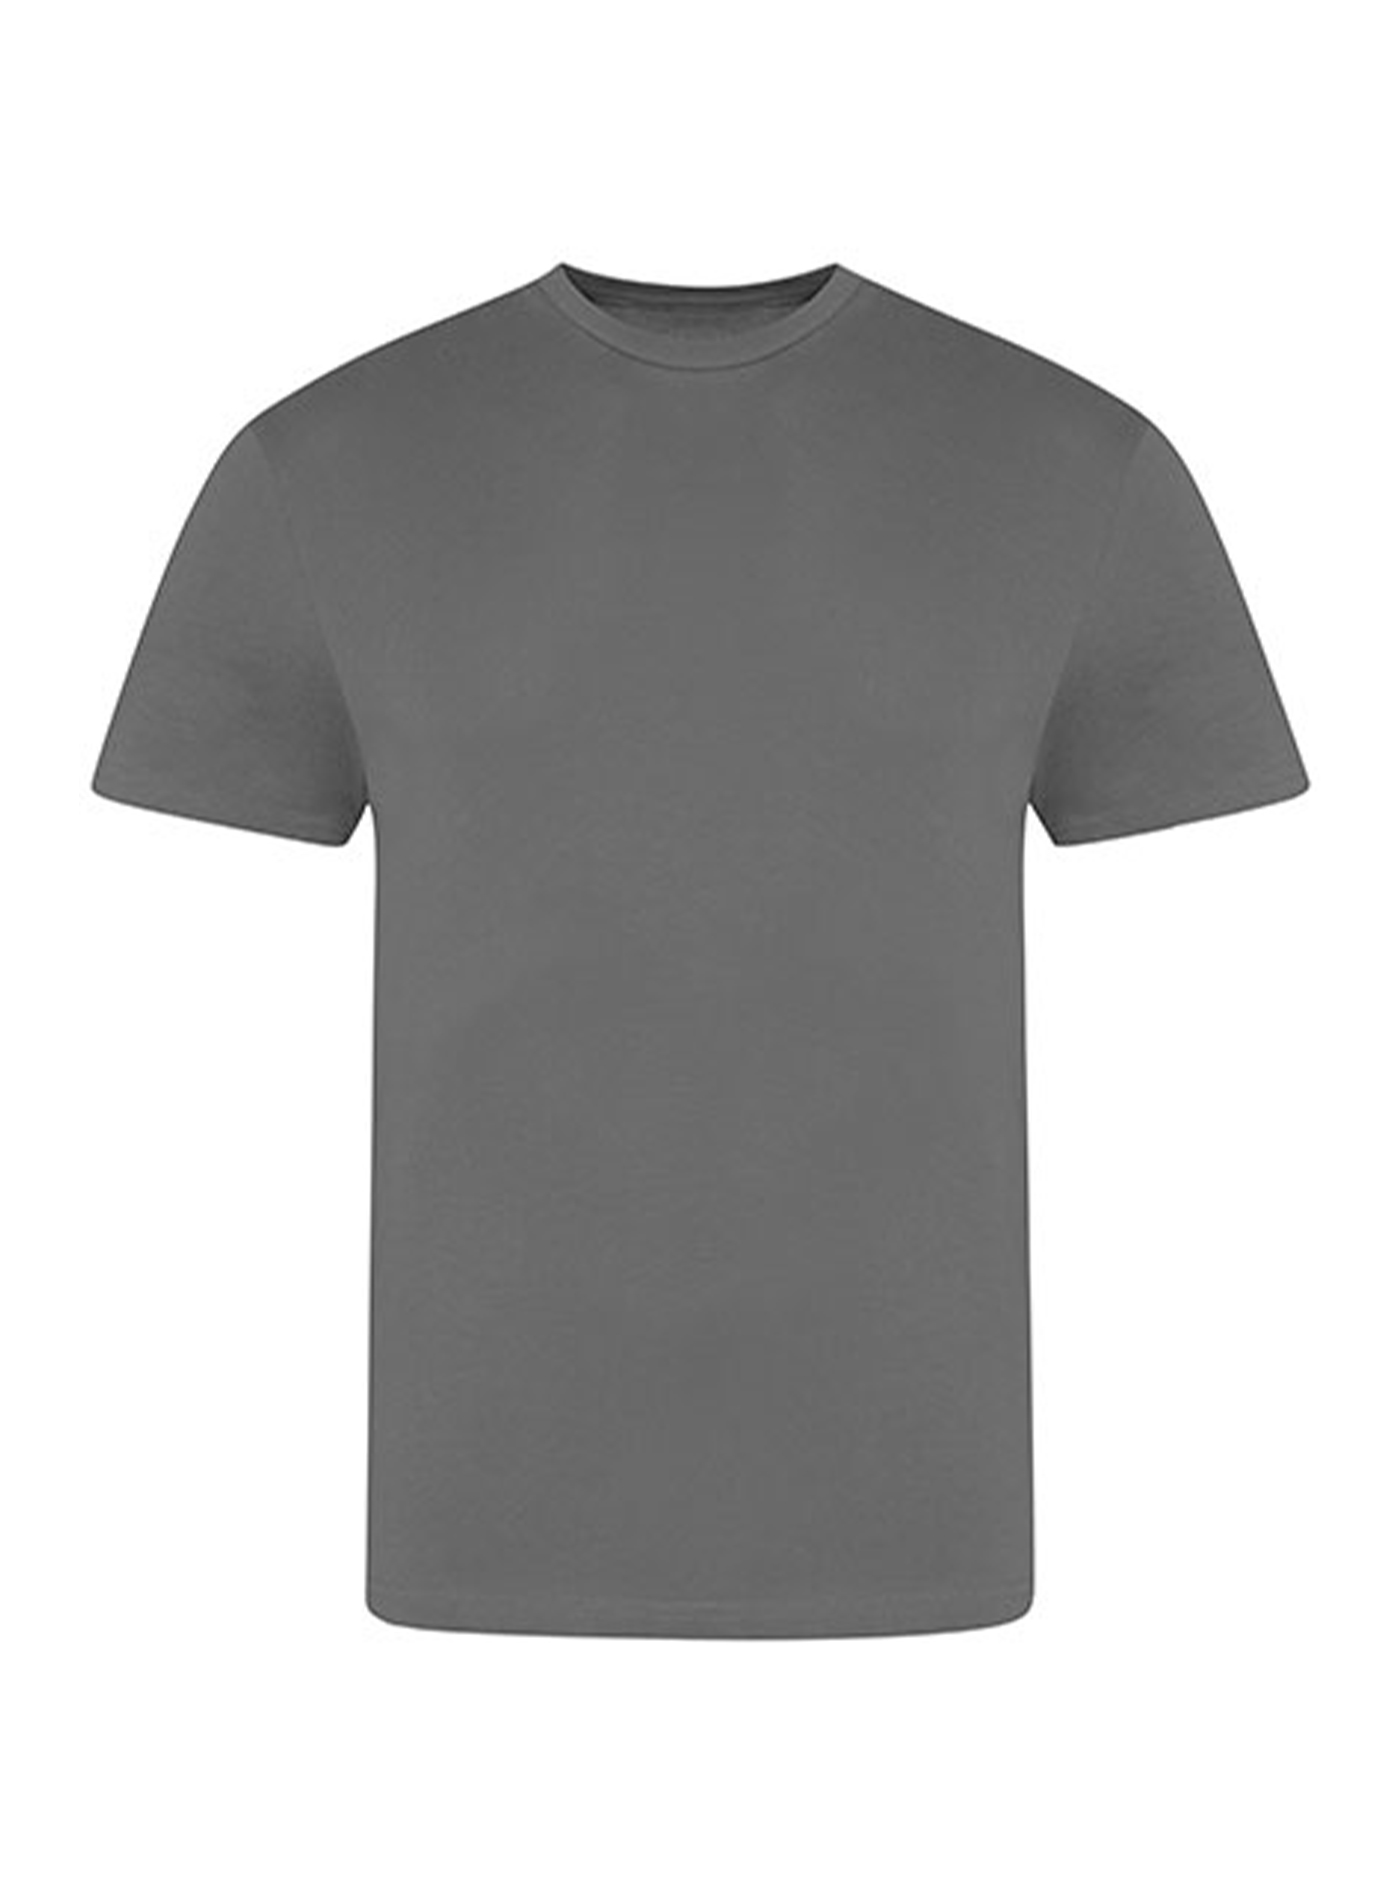 Pánské tričko Just Ts - Charcoal XL